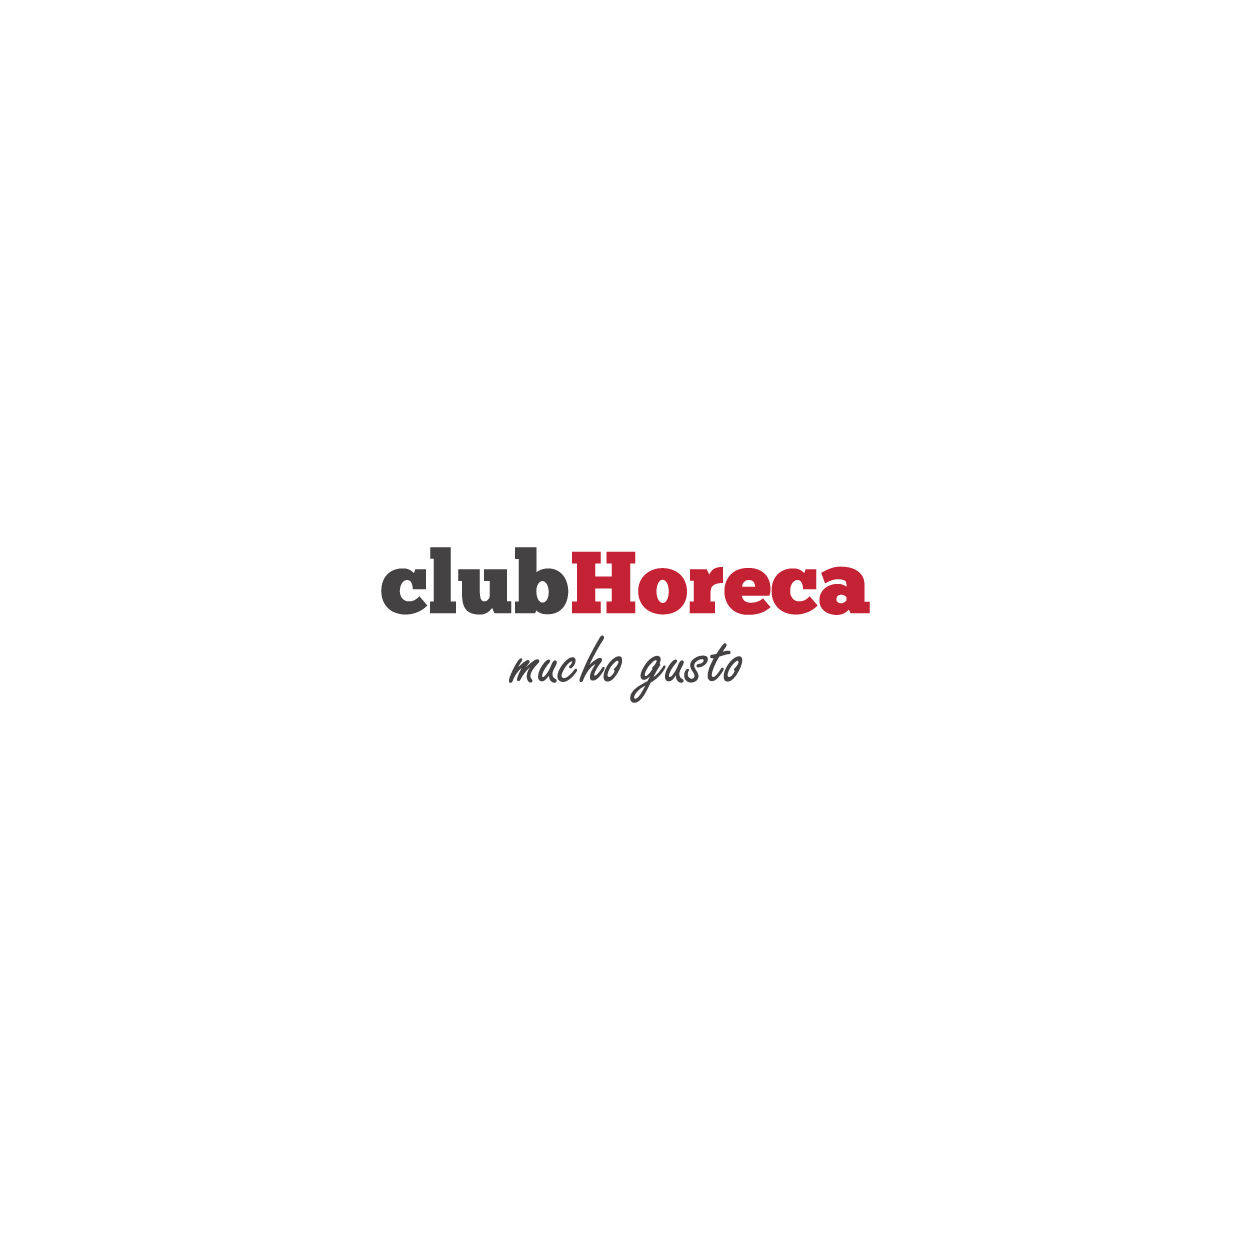 clubhoreca-logo